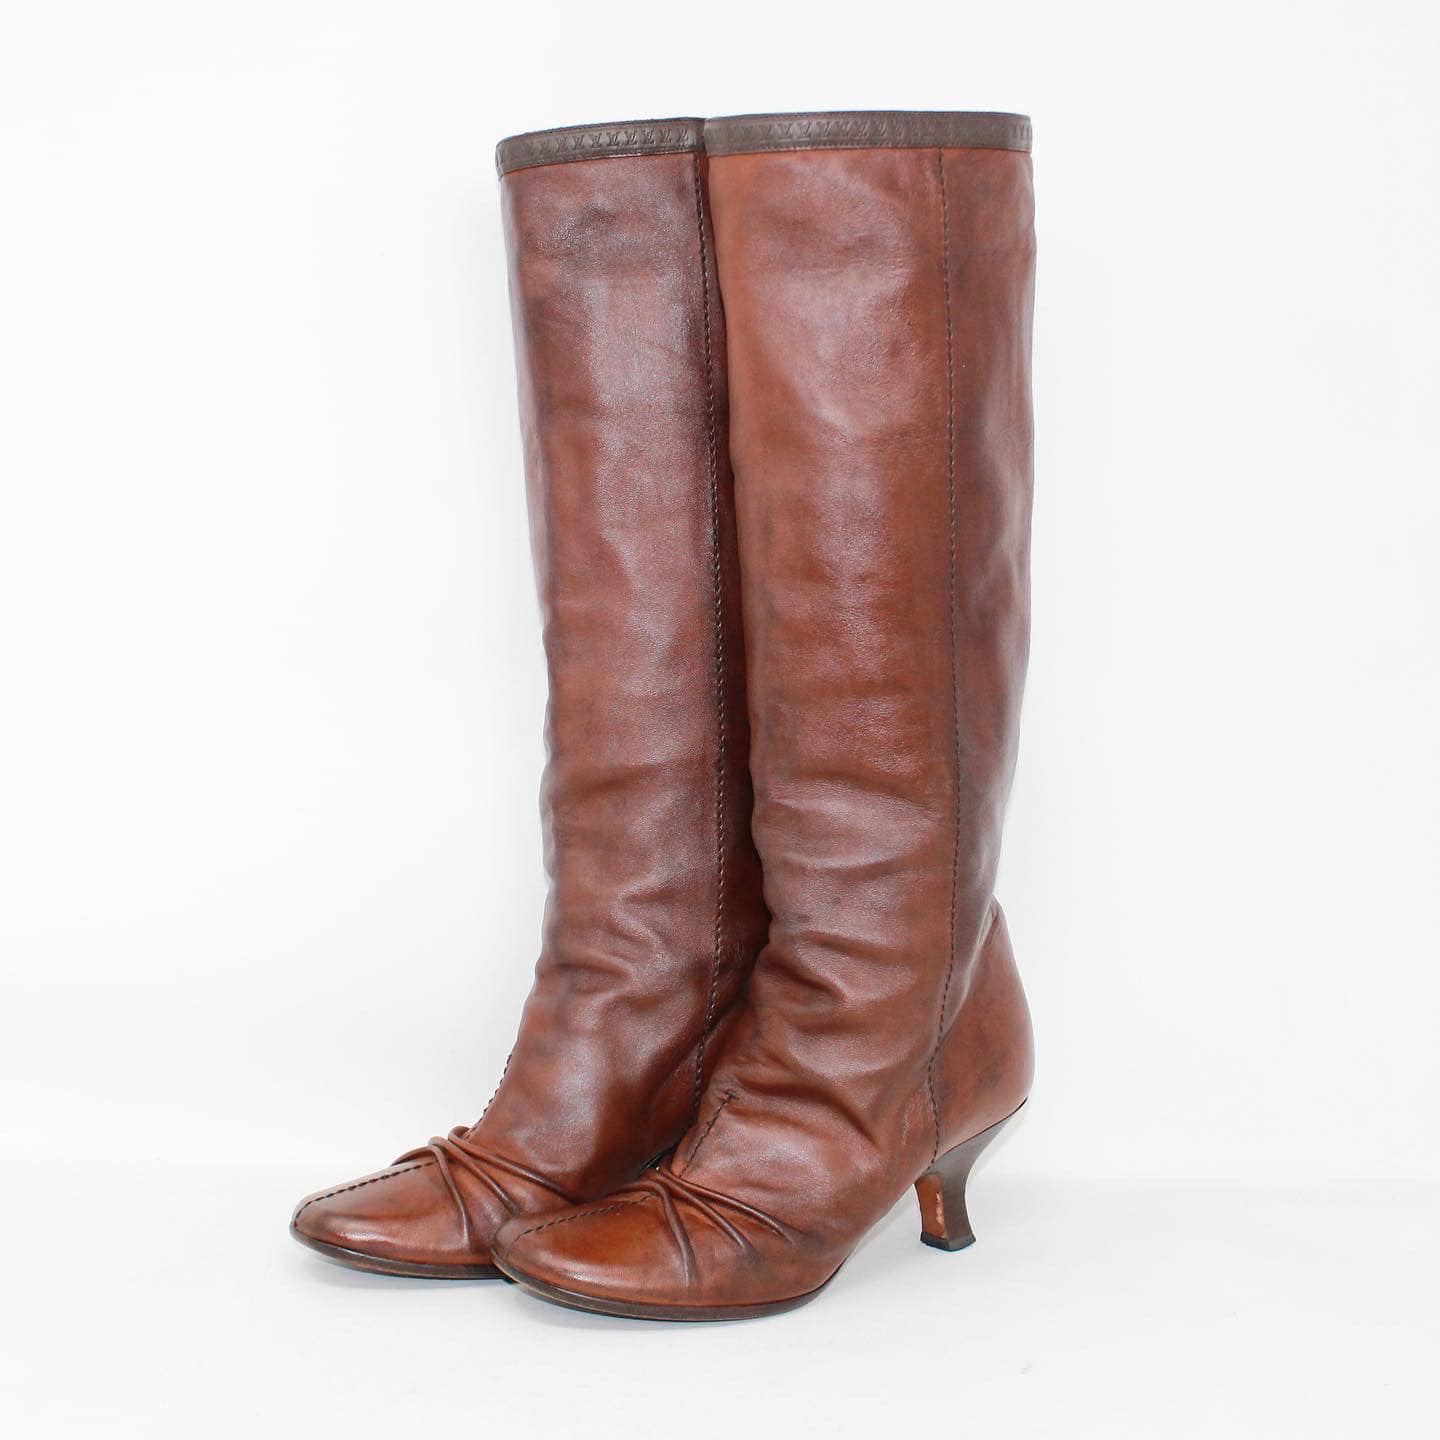 LOUIS VUITTON 39994 Vintage Brown Leather Heeled Boots US 5.5 EU 35.5 a